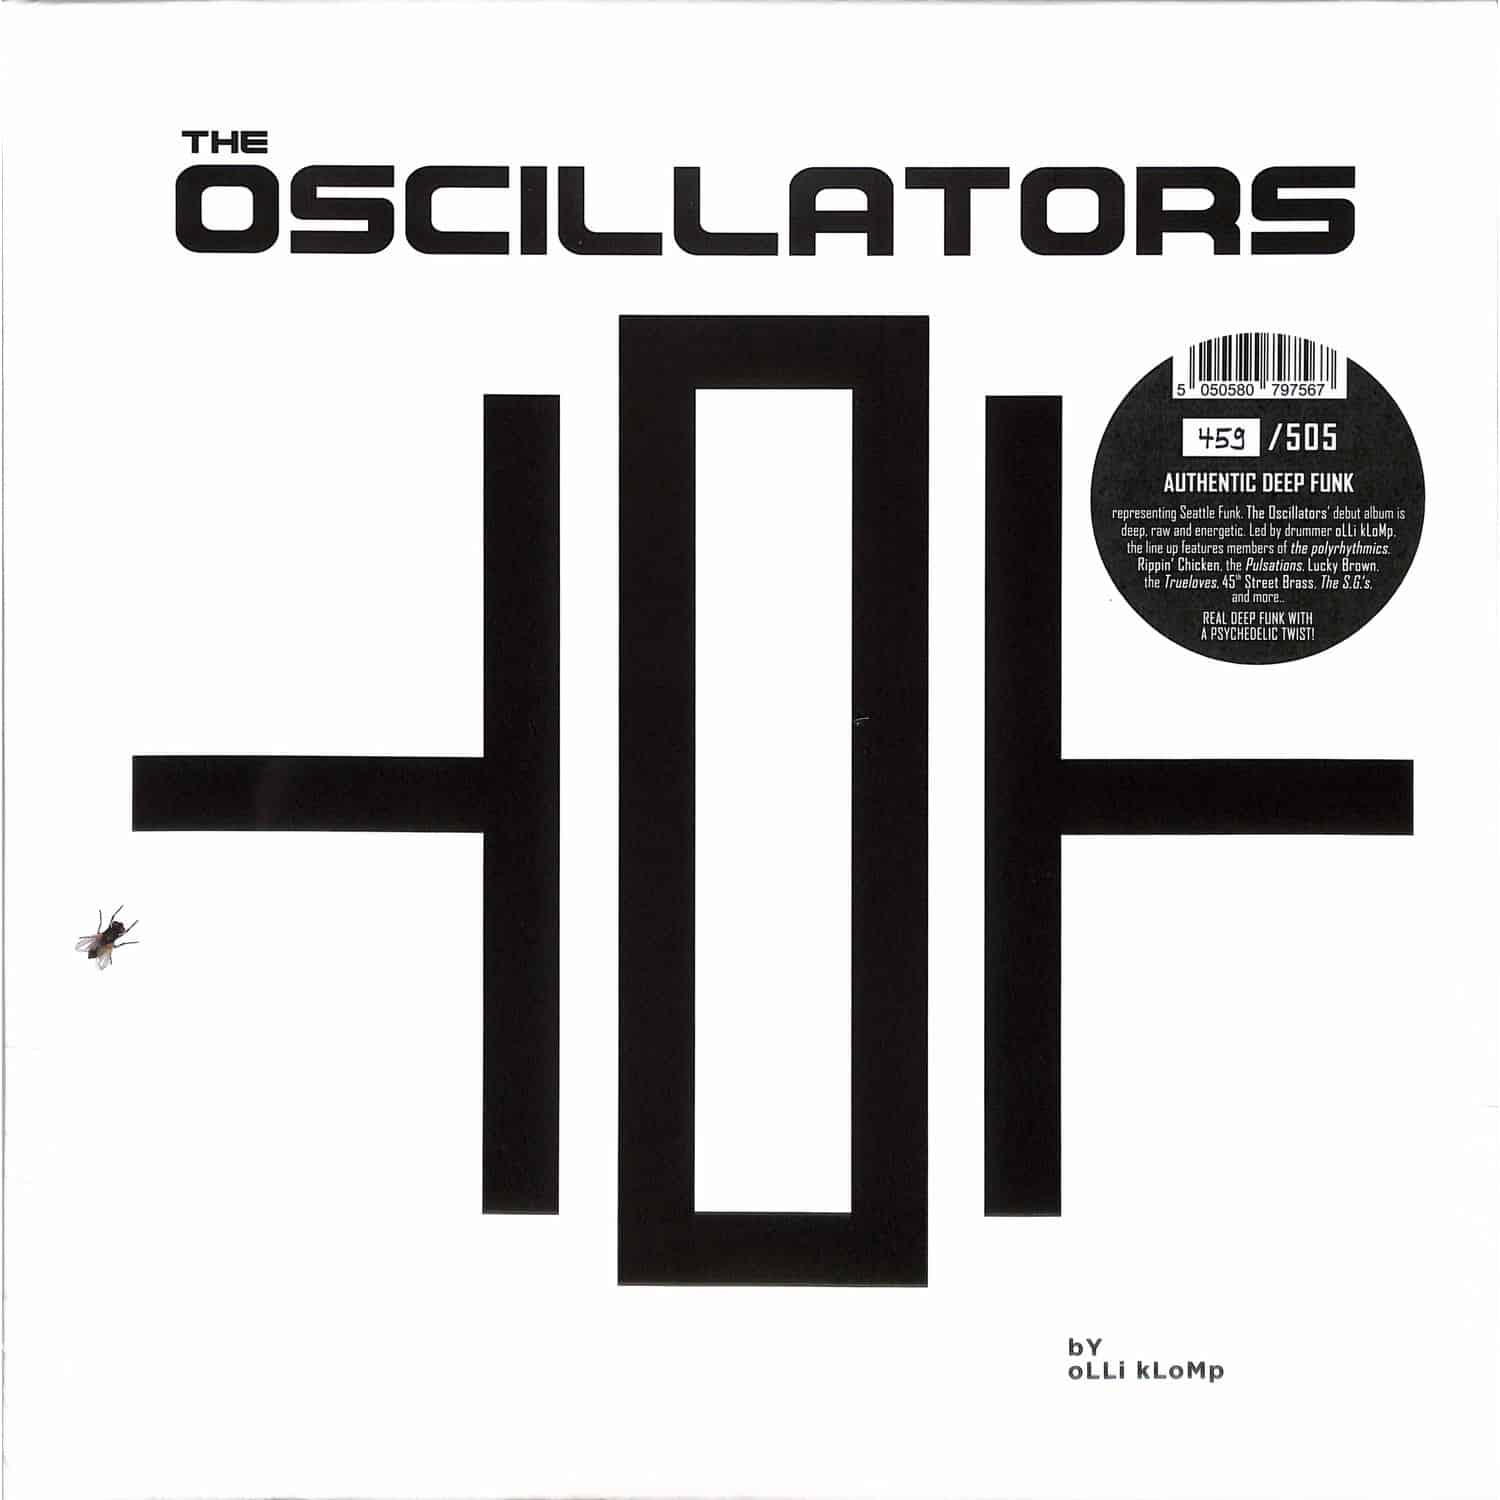 The Oscillators - THE OSCILLATORS 